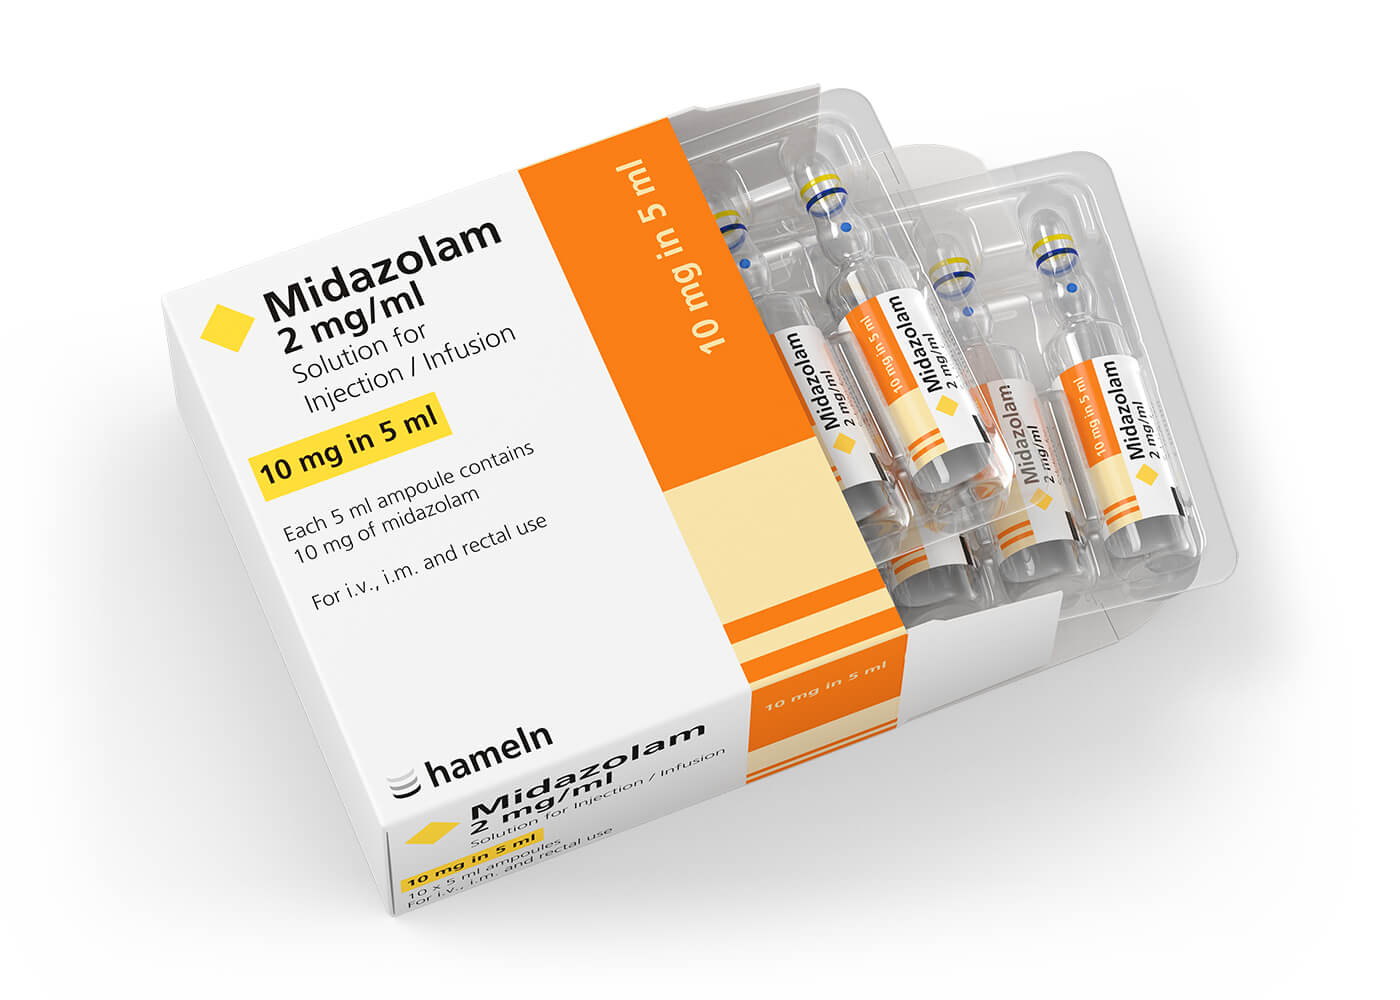 Midazolam_UK_2_mg-ml_in_5_ml_Pack-Amp_10St_2020-20